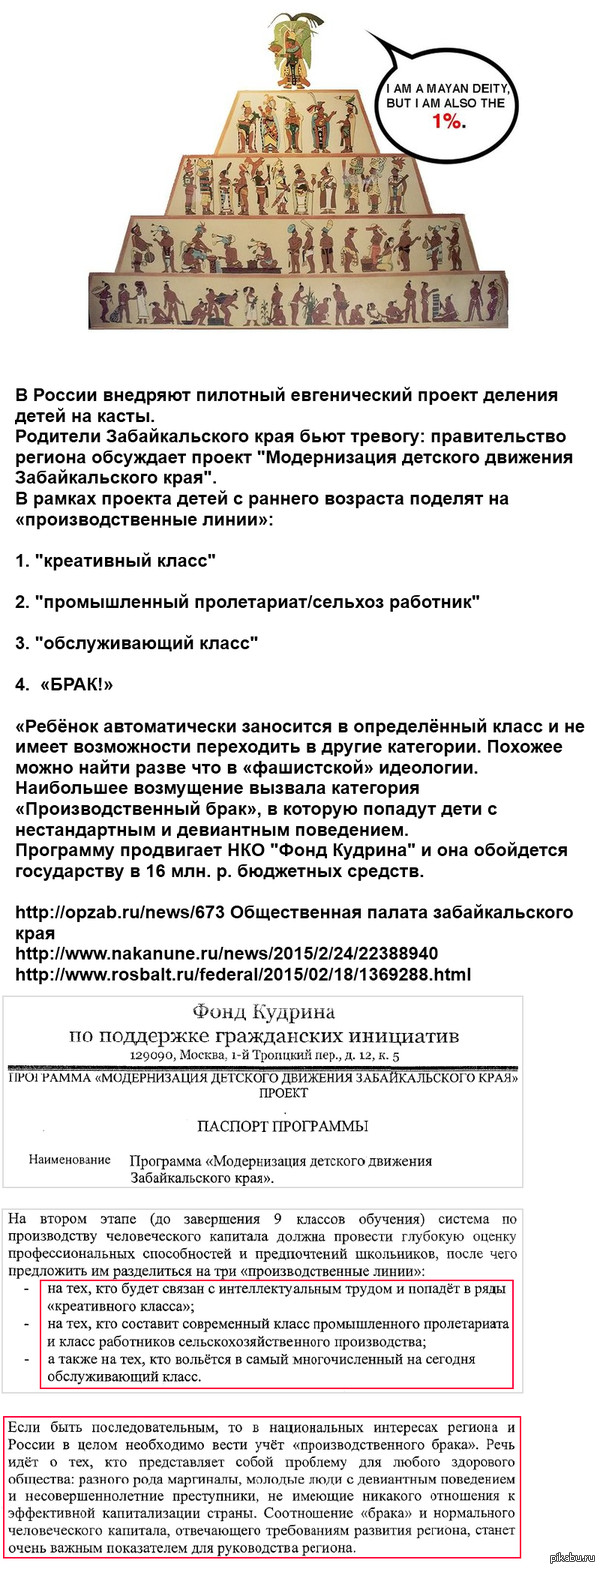  21 !        . http://opzab.ru/news/673    http://www.nakanune.ru/news/2015/2/24/22388940  http://www.rosbalt.ru/federal/2015/02/18/1369288.html